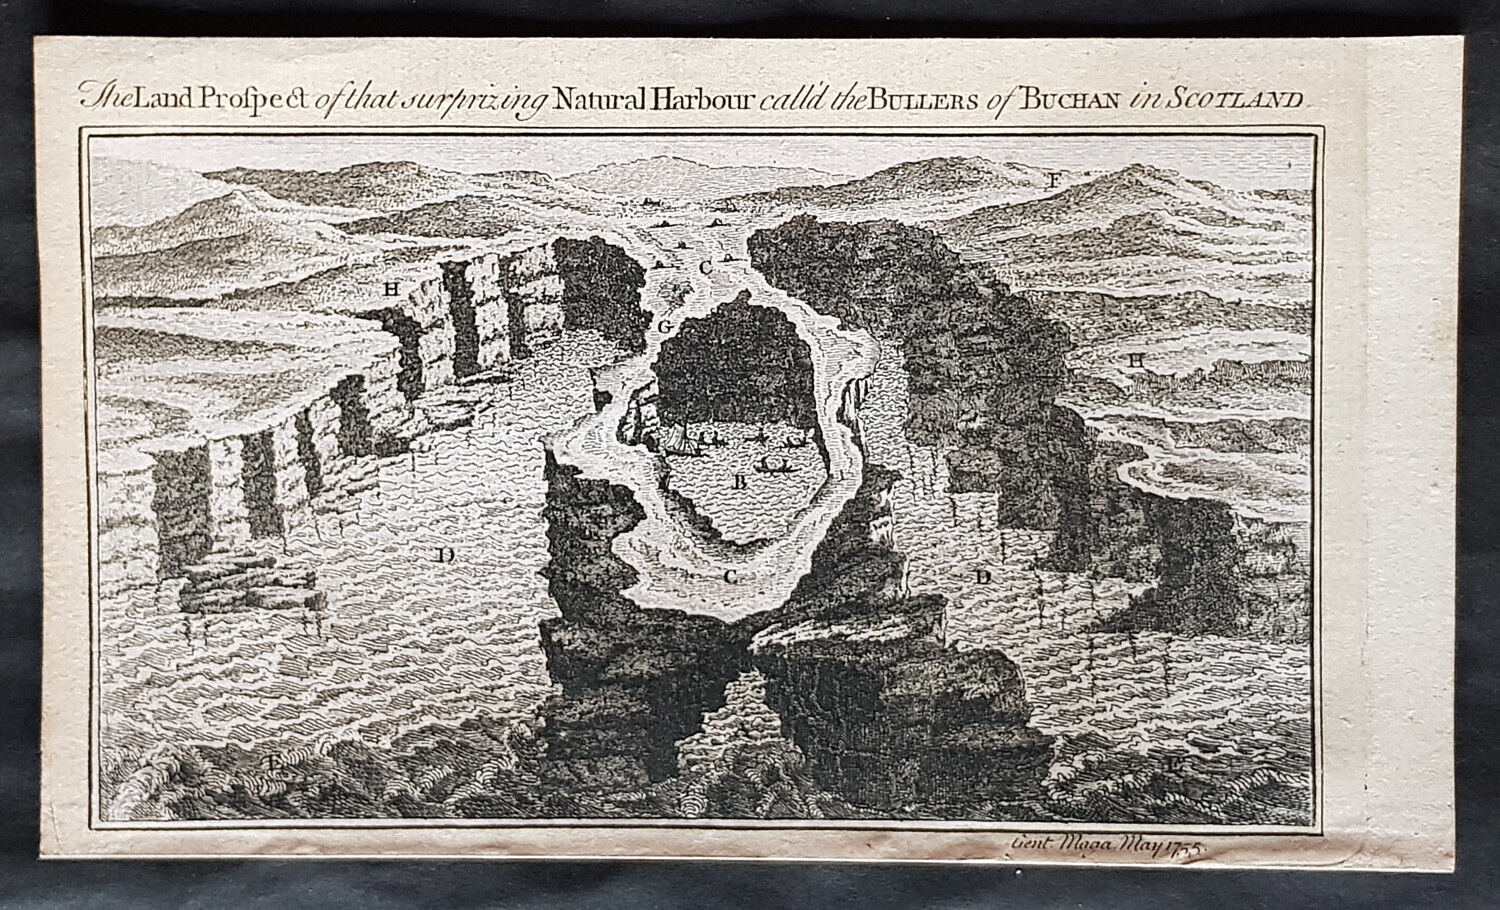 1755 Gentlemens Magazine Antique Print View of Bullers of Buchan Scotland